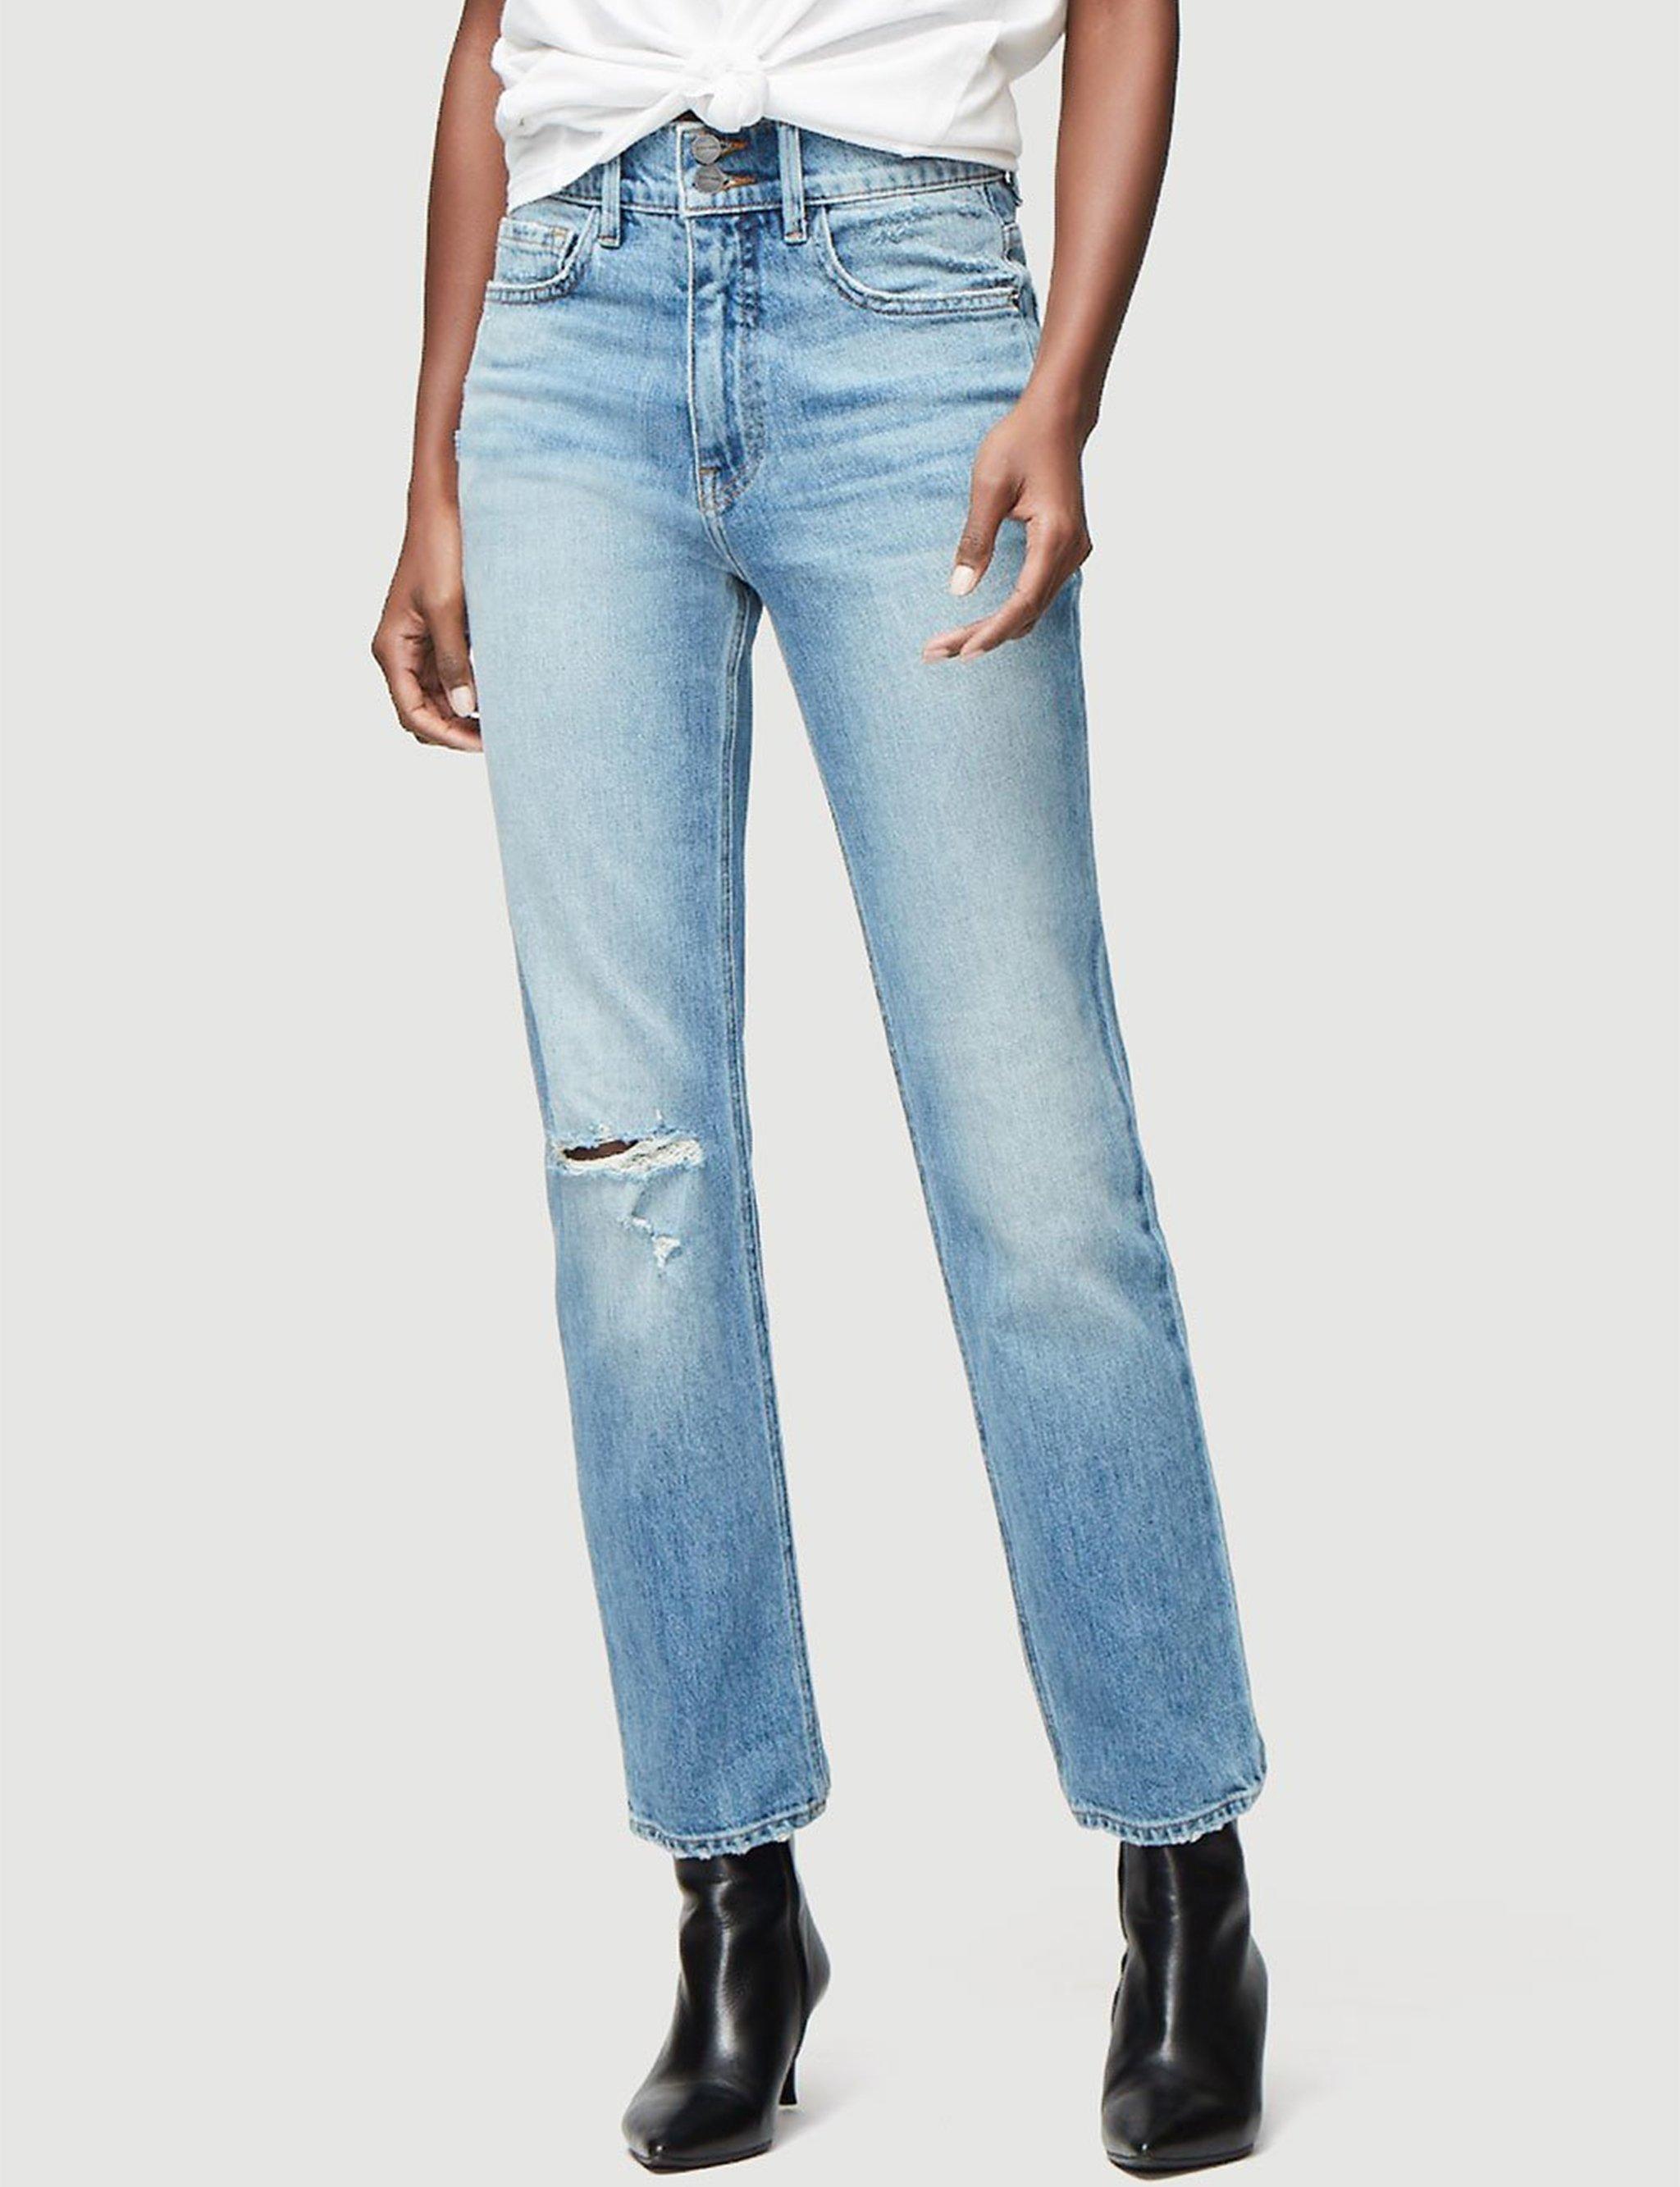 frame le sylvie slender straight heritage jeans